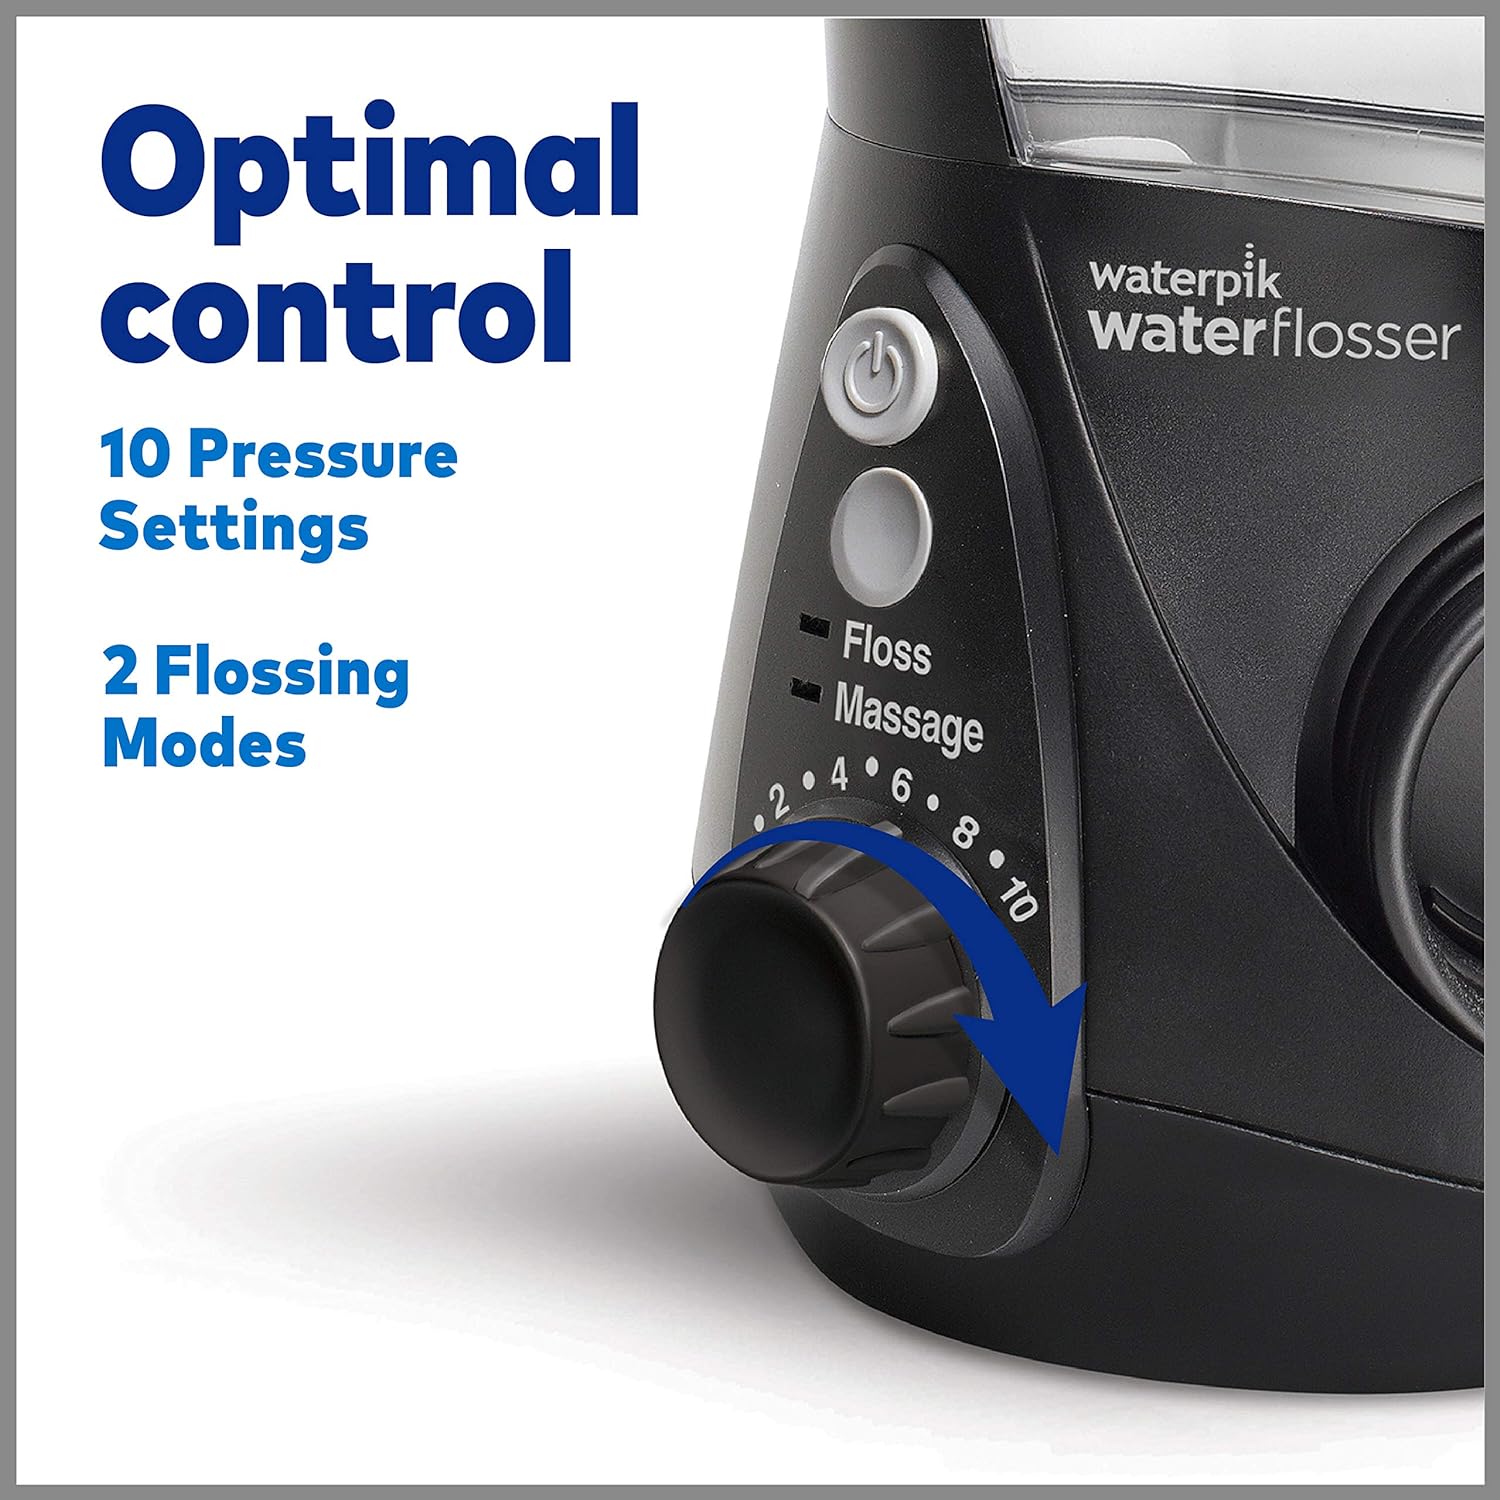 Waterpik WP-660 Water Flosser Electric Dental Countertop Professional Oral Irrigator For Teeth